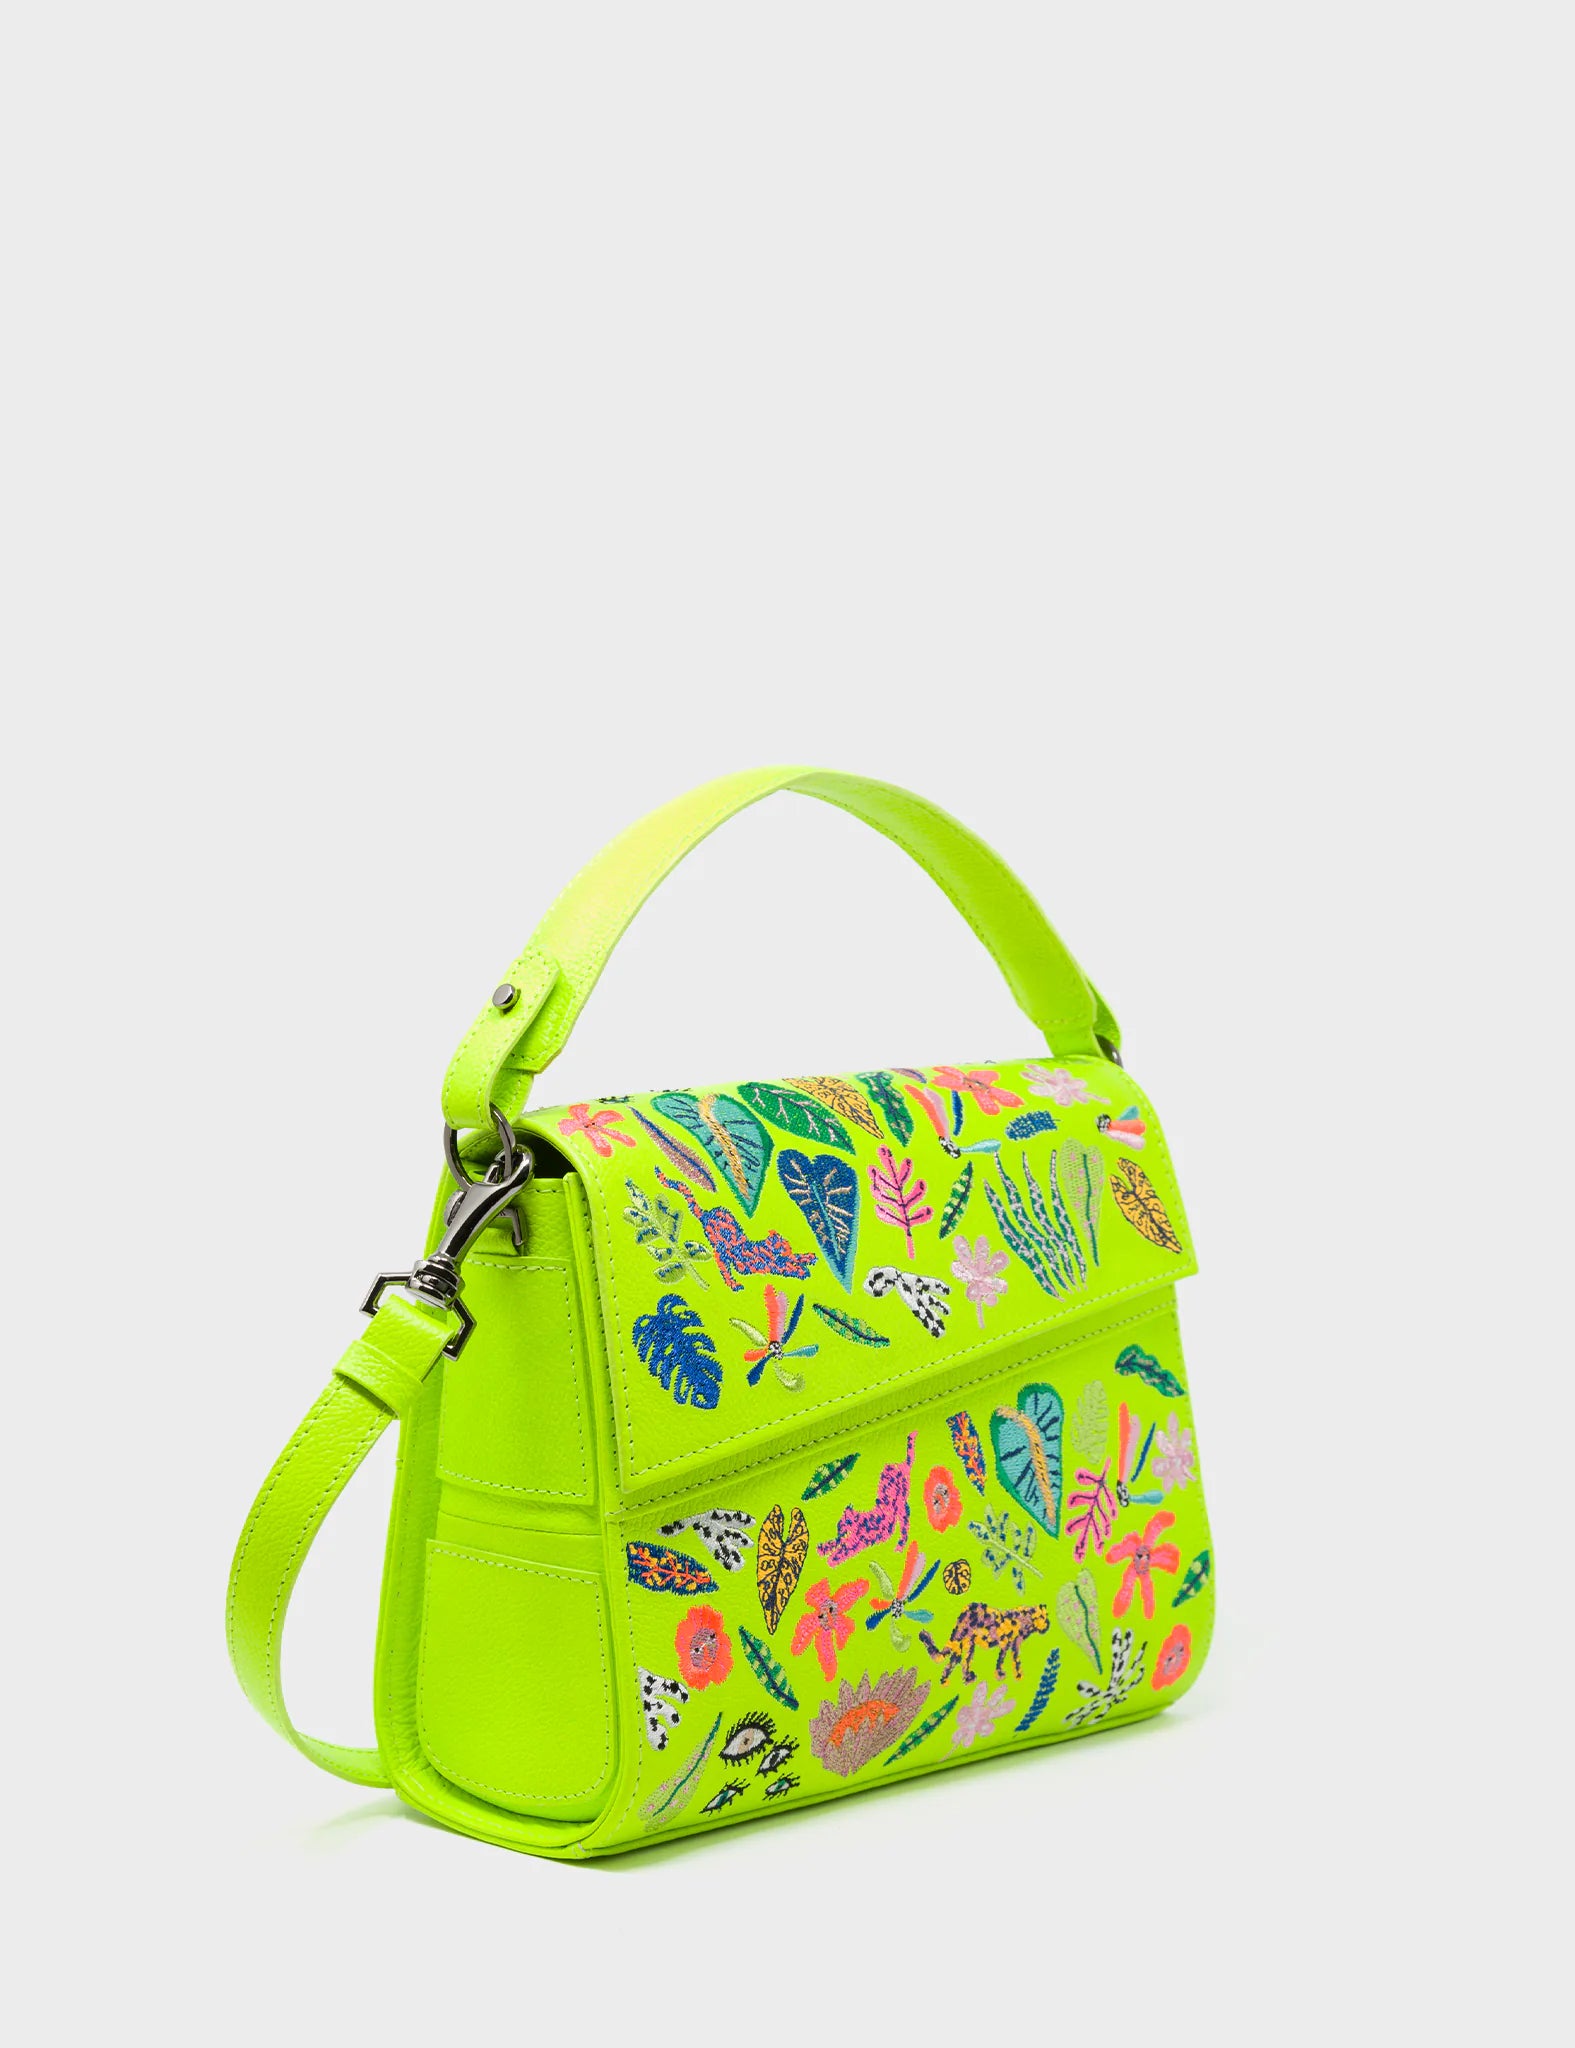 Anastasio Mini Crossbody Handbag Neon Yellow Leather - El Trópico Embroidery Design